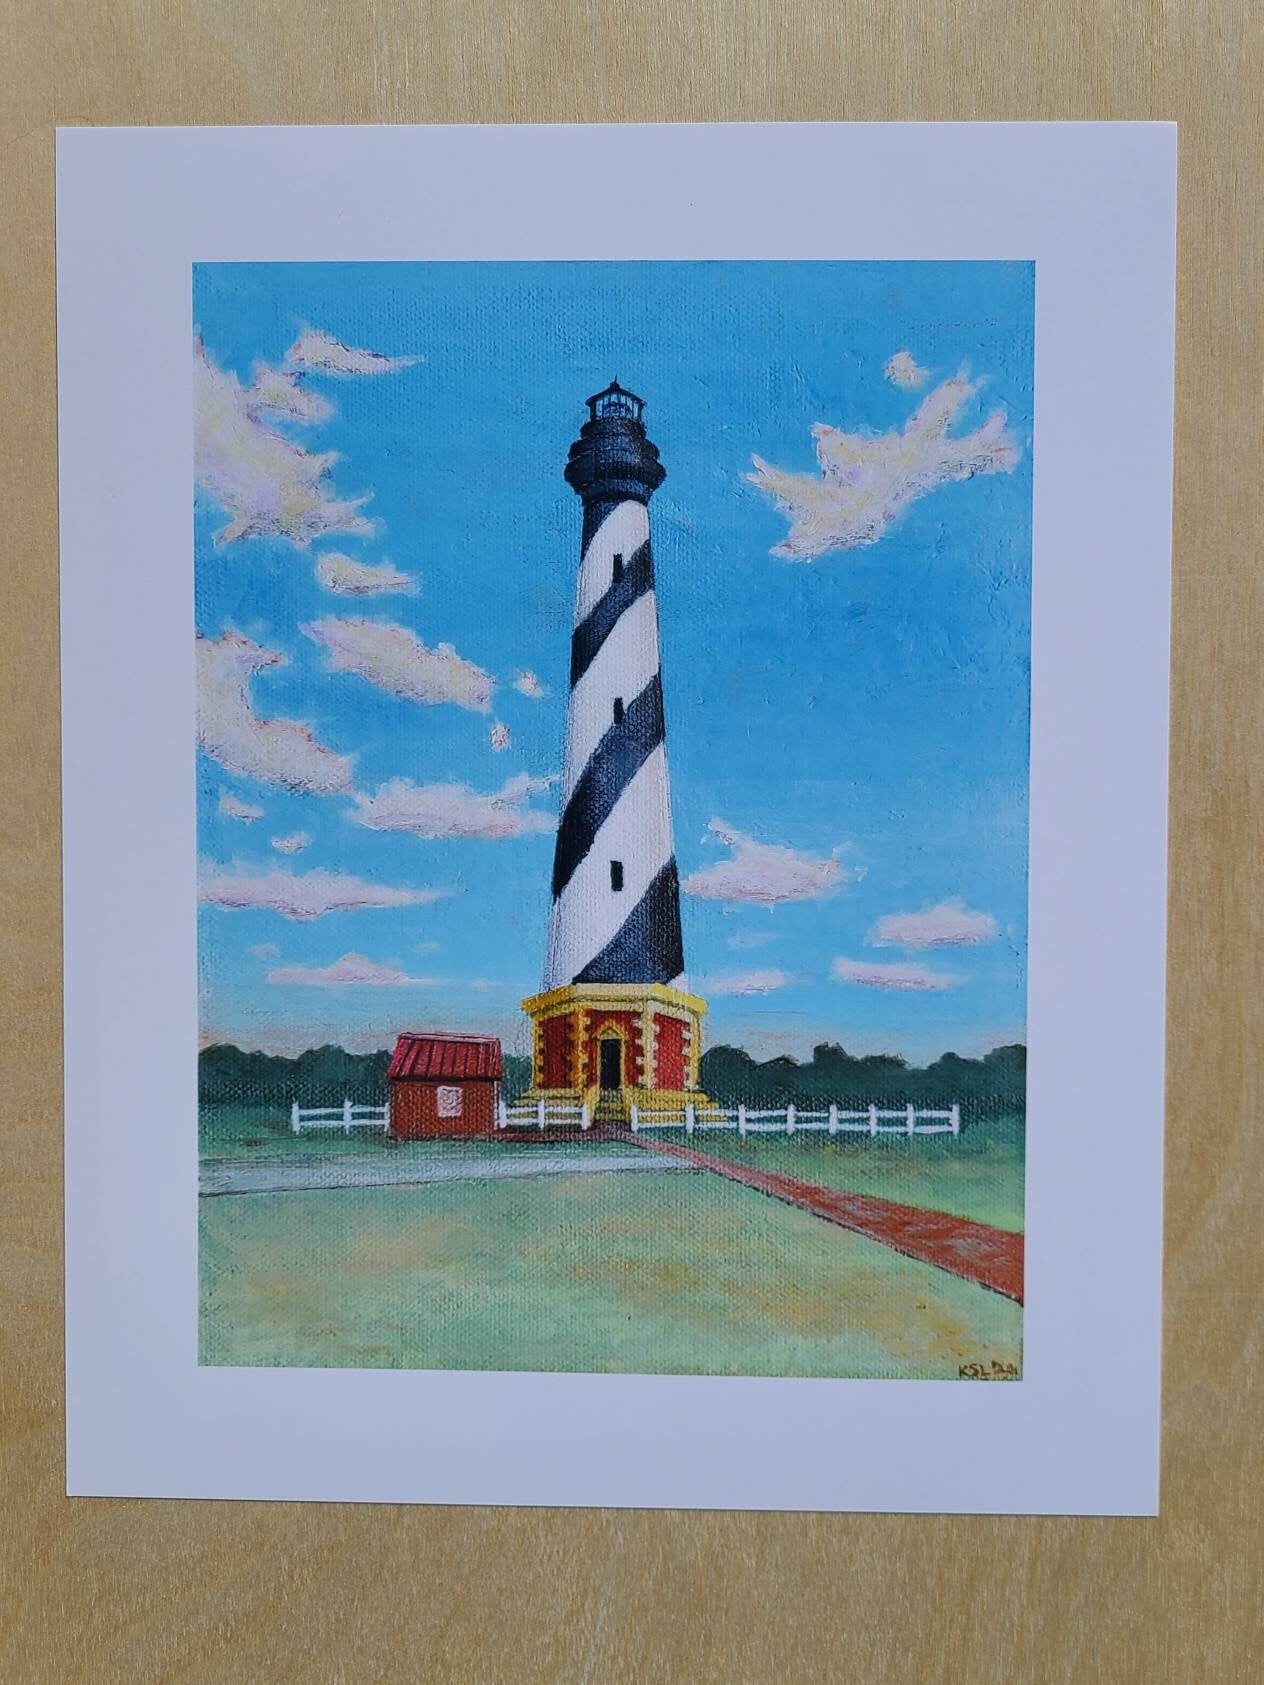 Cape Hatteras Lighthouse Print